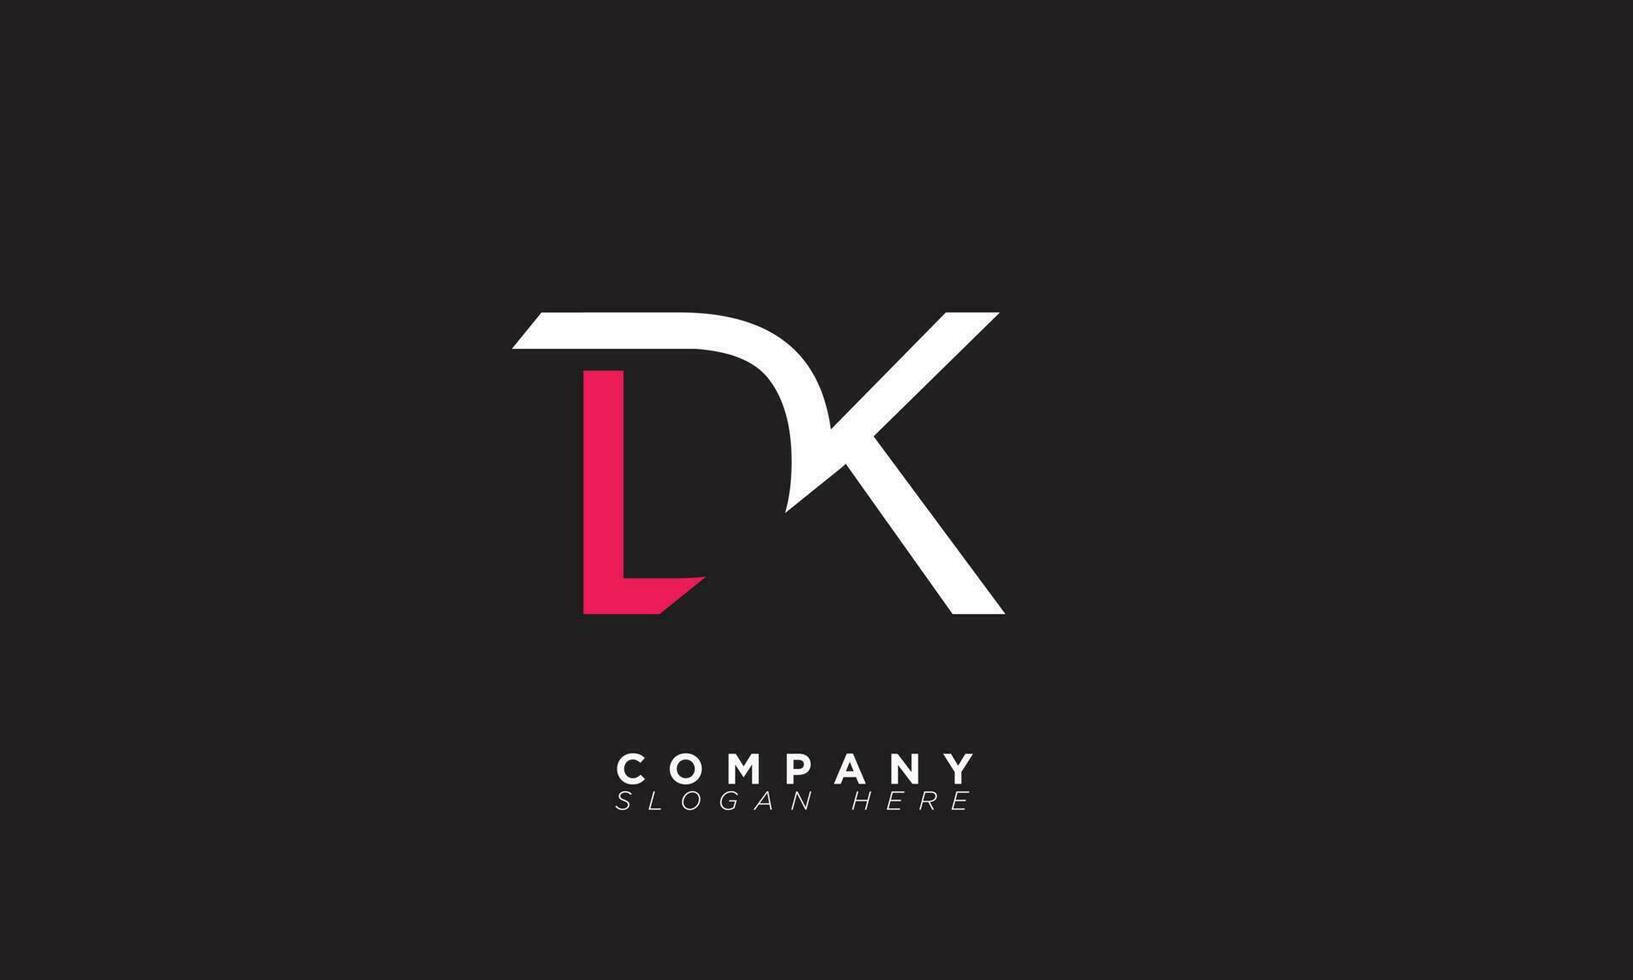 DK Alphabet letters Initials Monogram logo KD, D and K vector